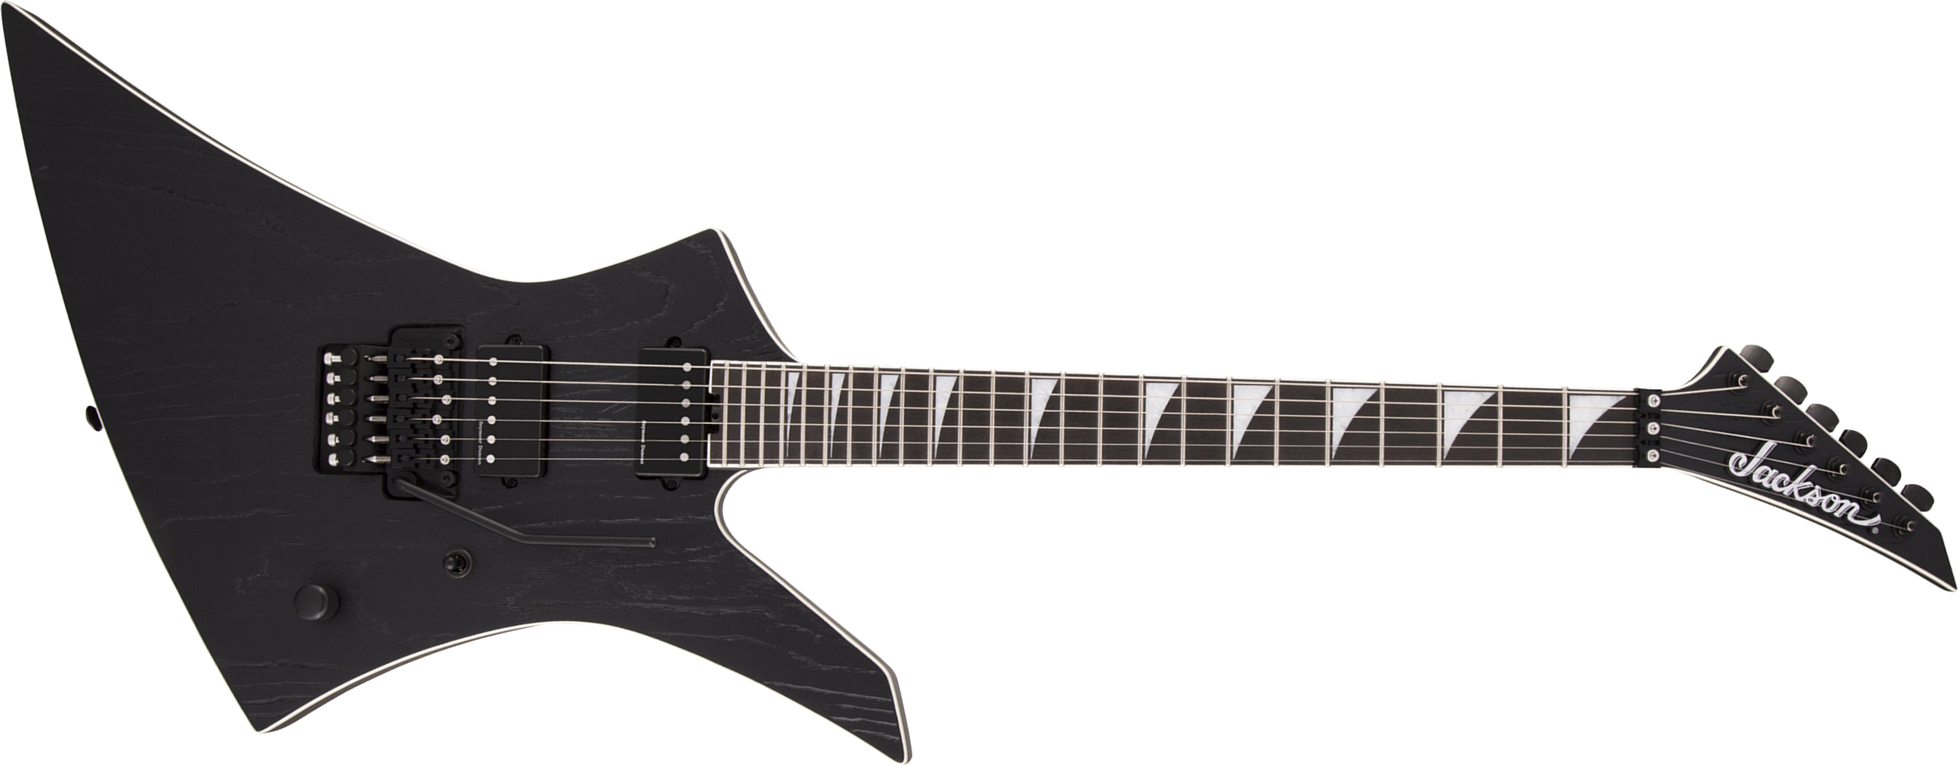 Jackson Jeff Loomis Kelly Ash Pro Signature 2h Seymour Duncan Fr Eb - Black - Metal electric guitar - Main picture